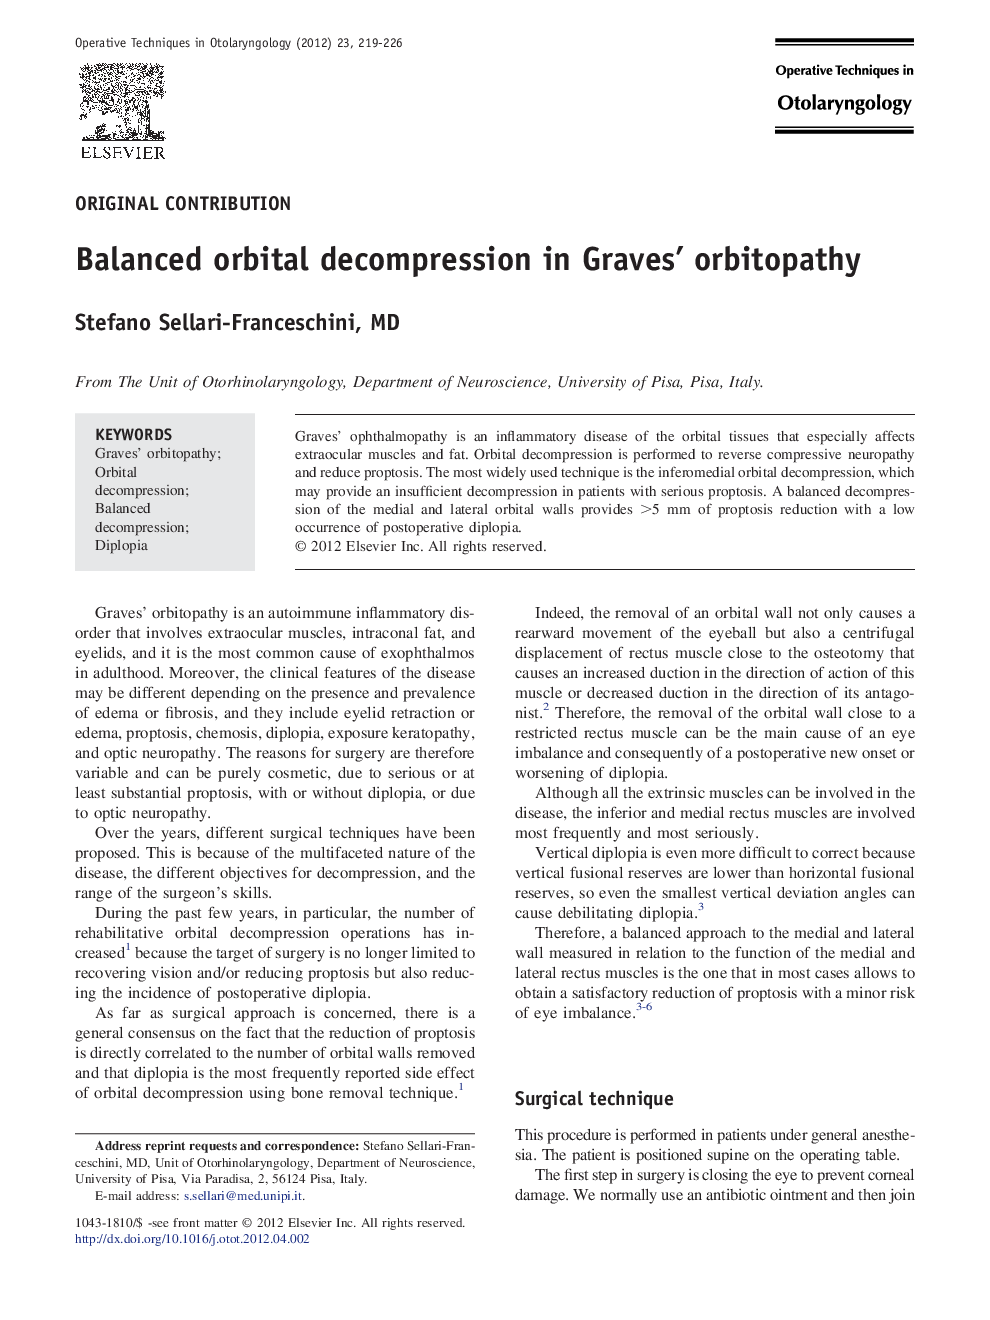 Balanced orbital decompression in Graves' orbitopathy